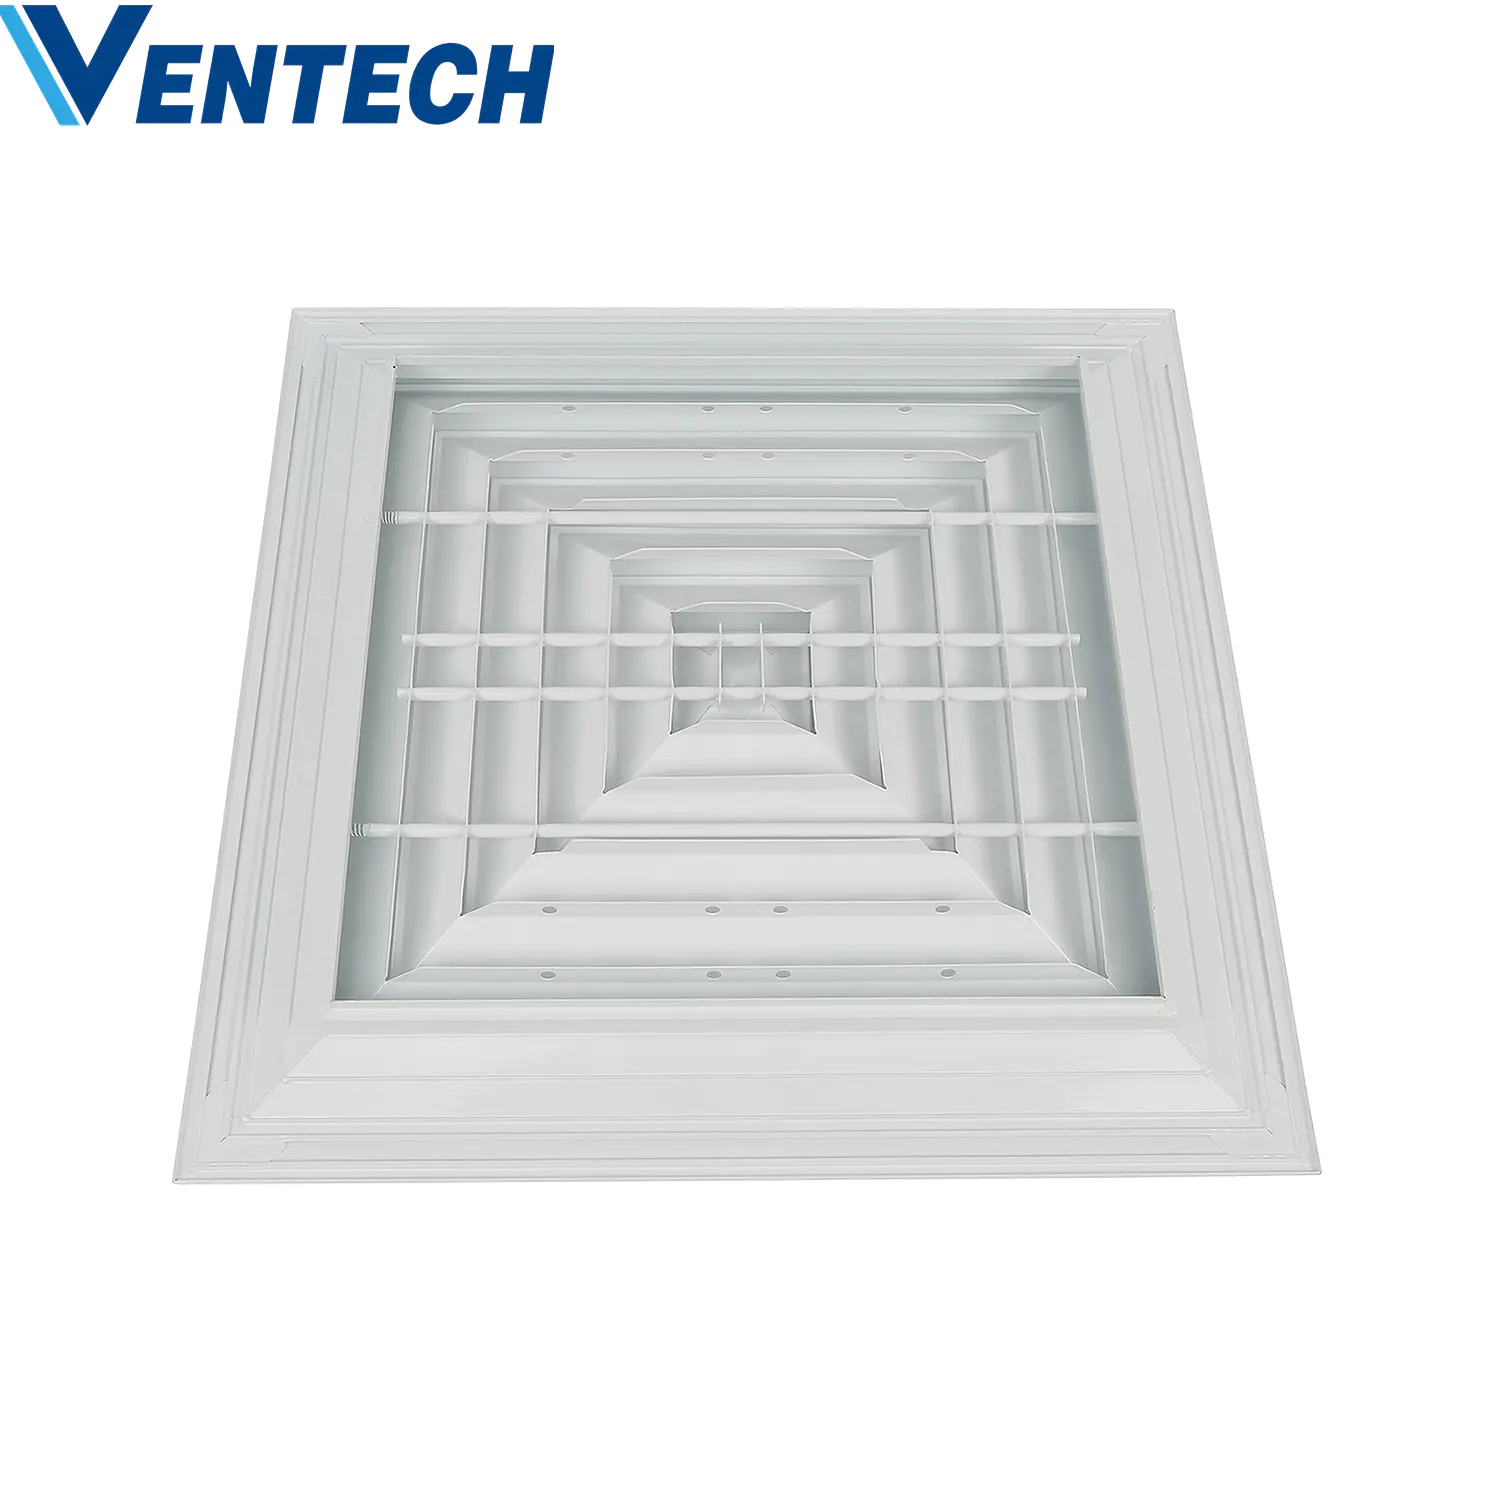 Hvac System Ventilation Air Conditioning Aluminum  Square ABS Ceiling Diffusers